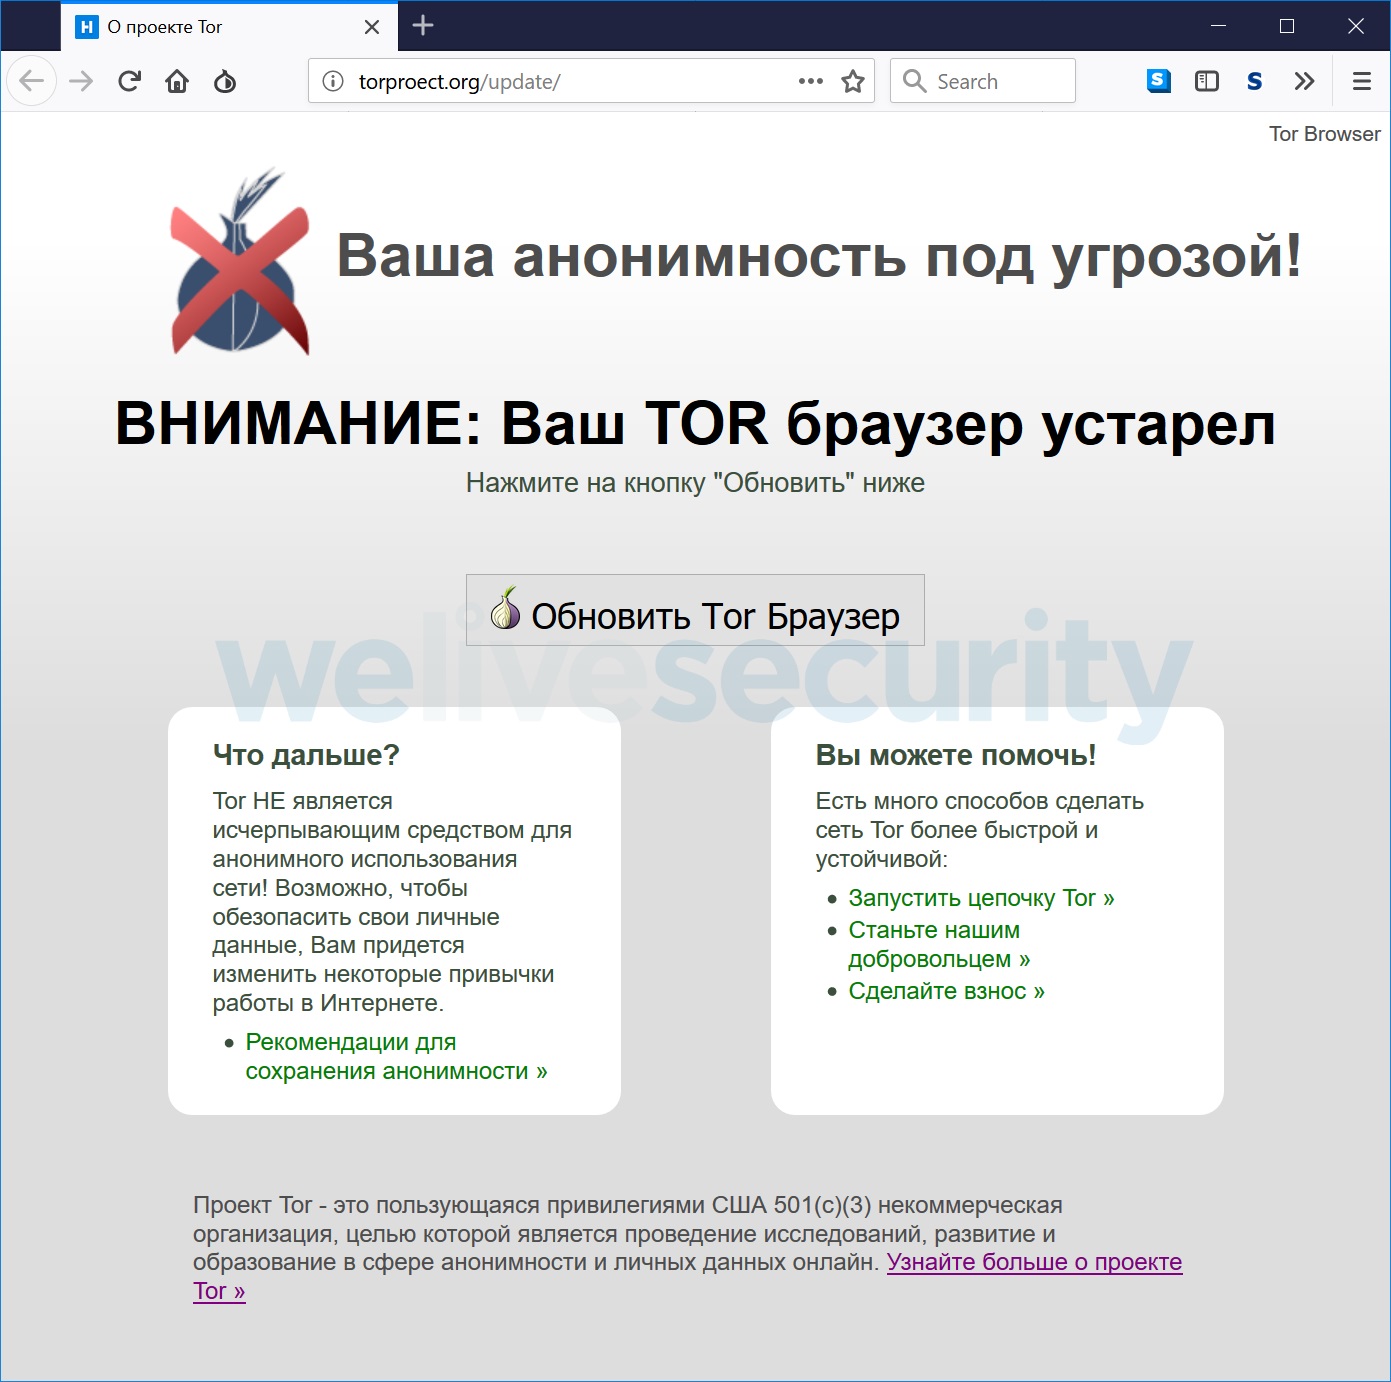 Browser tor вирусы hydra2web фильм darknet